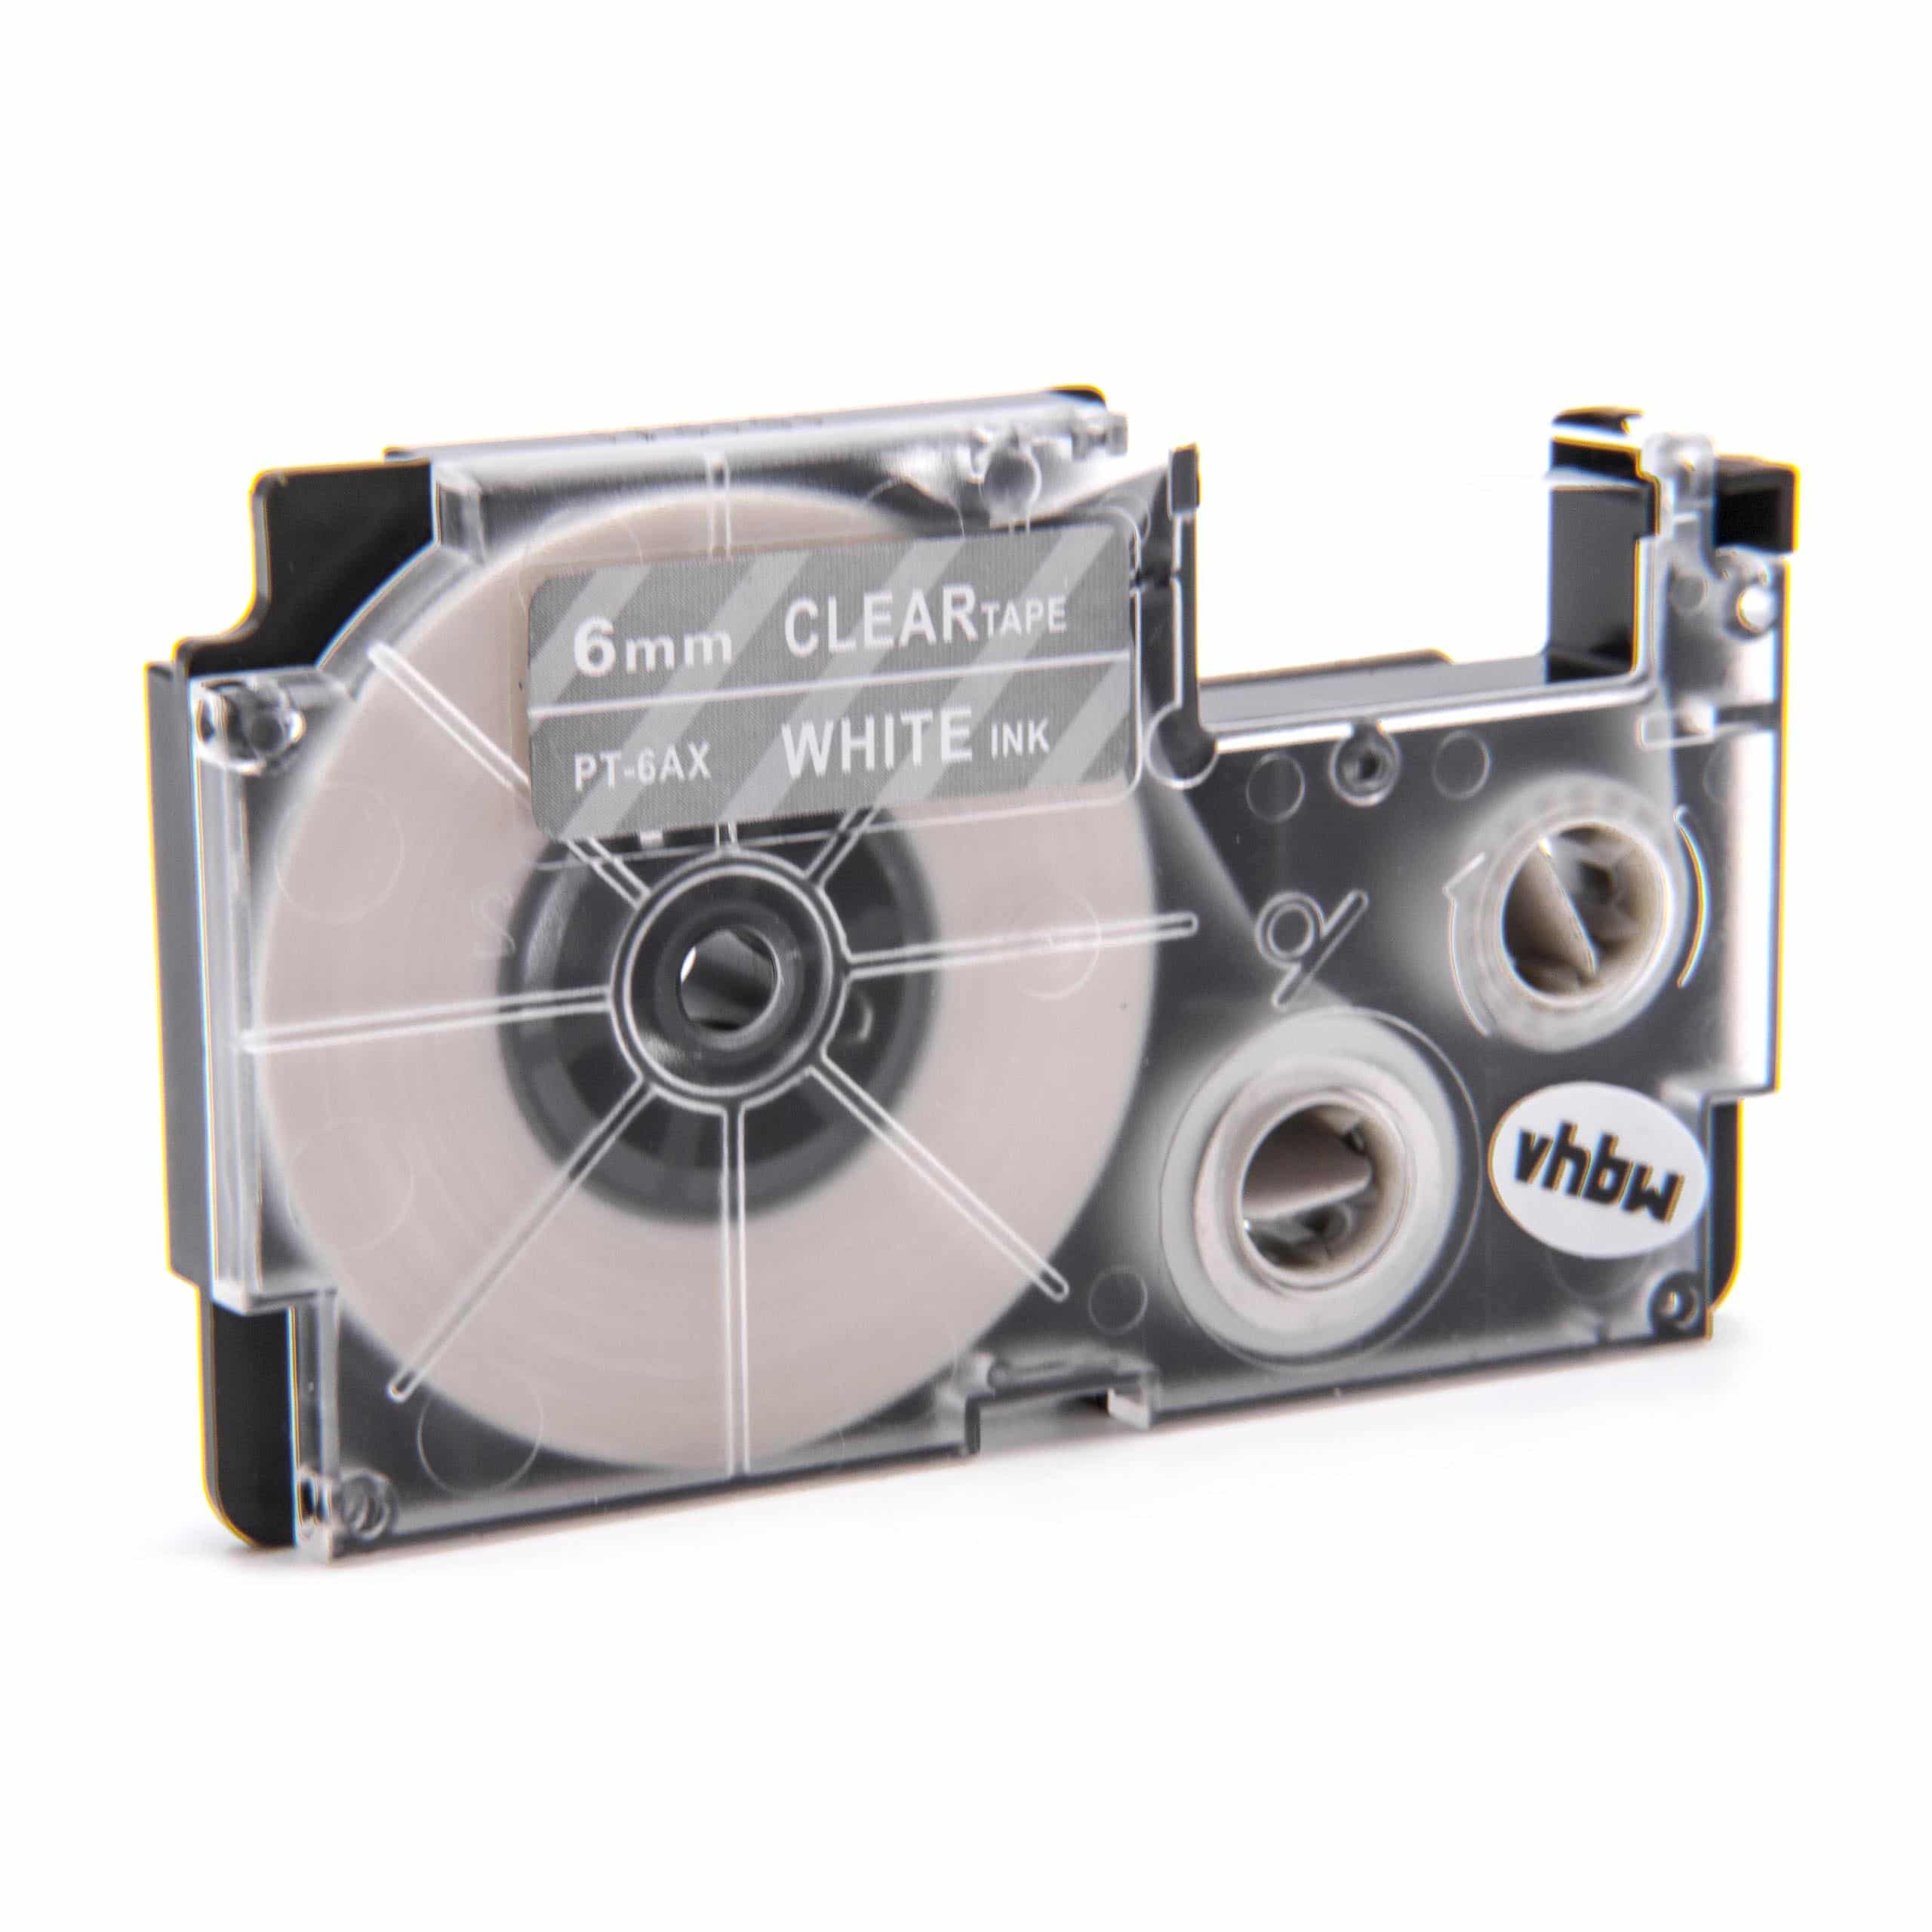 Cassetta nastro sostituisce Casio XR-6AX per etichettatrice Casio 6mm bianco su trasparente